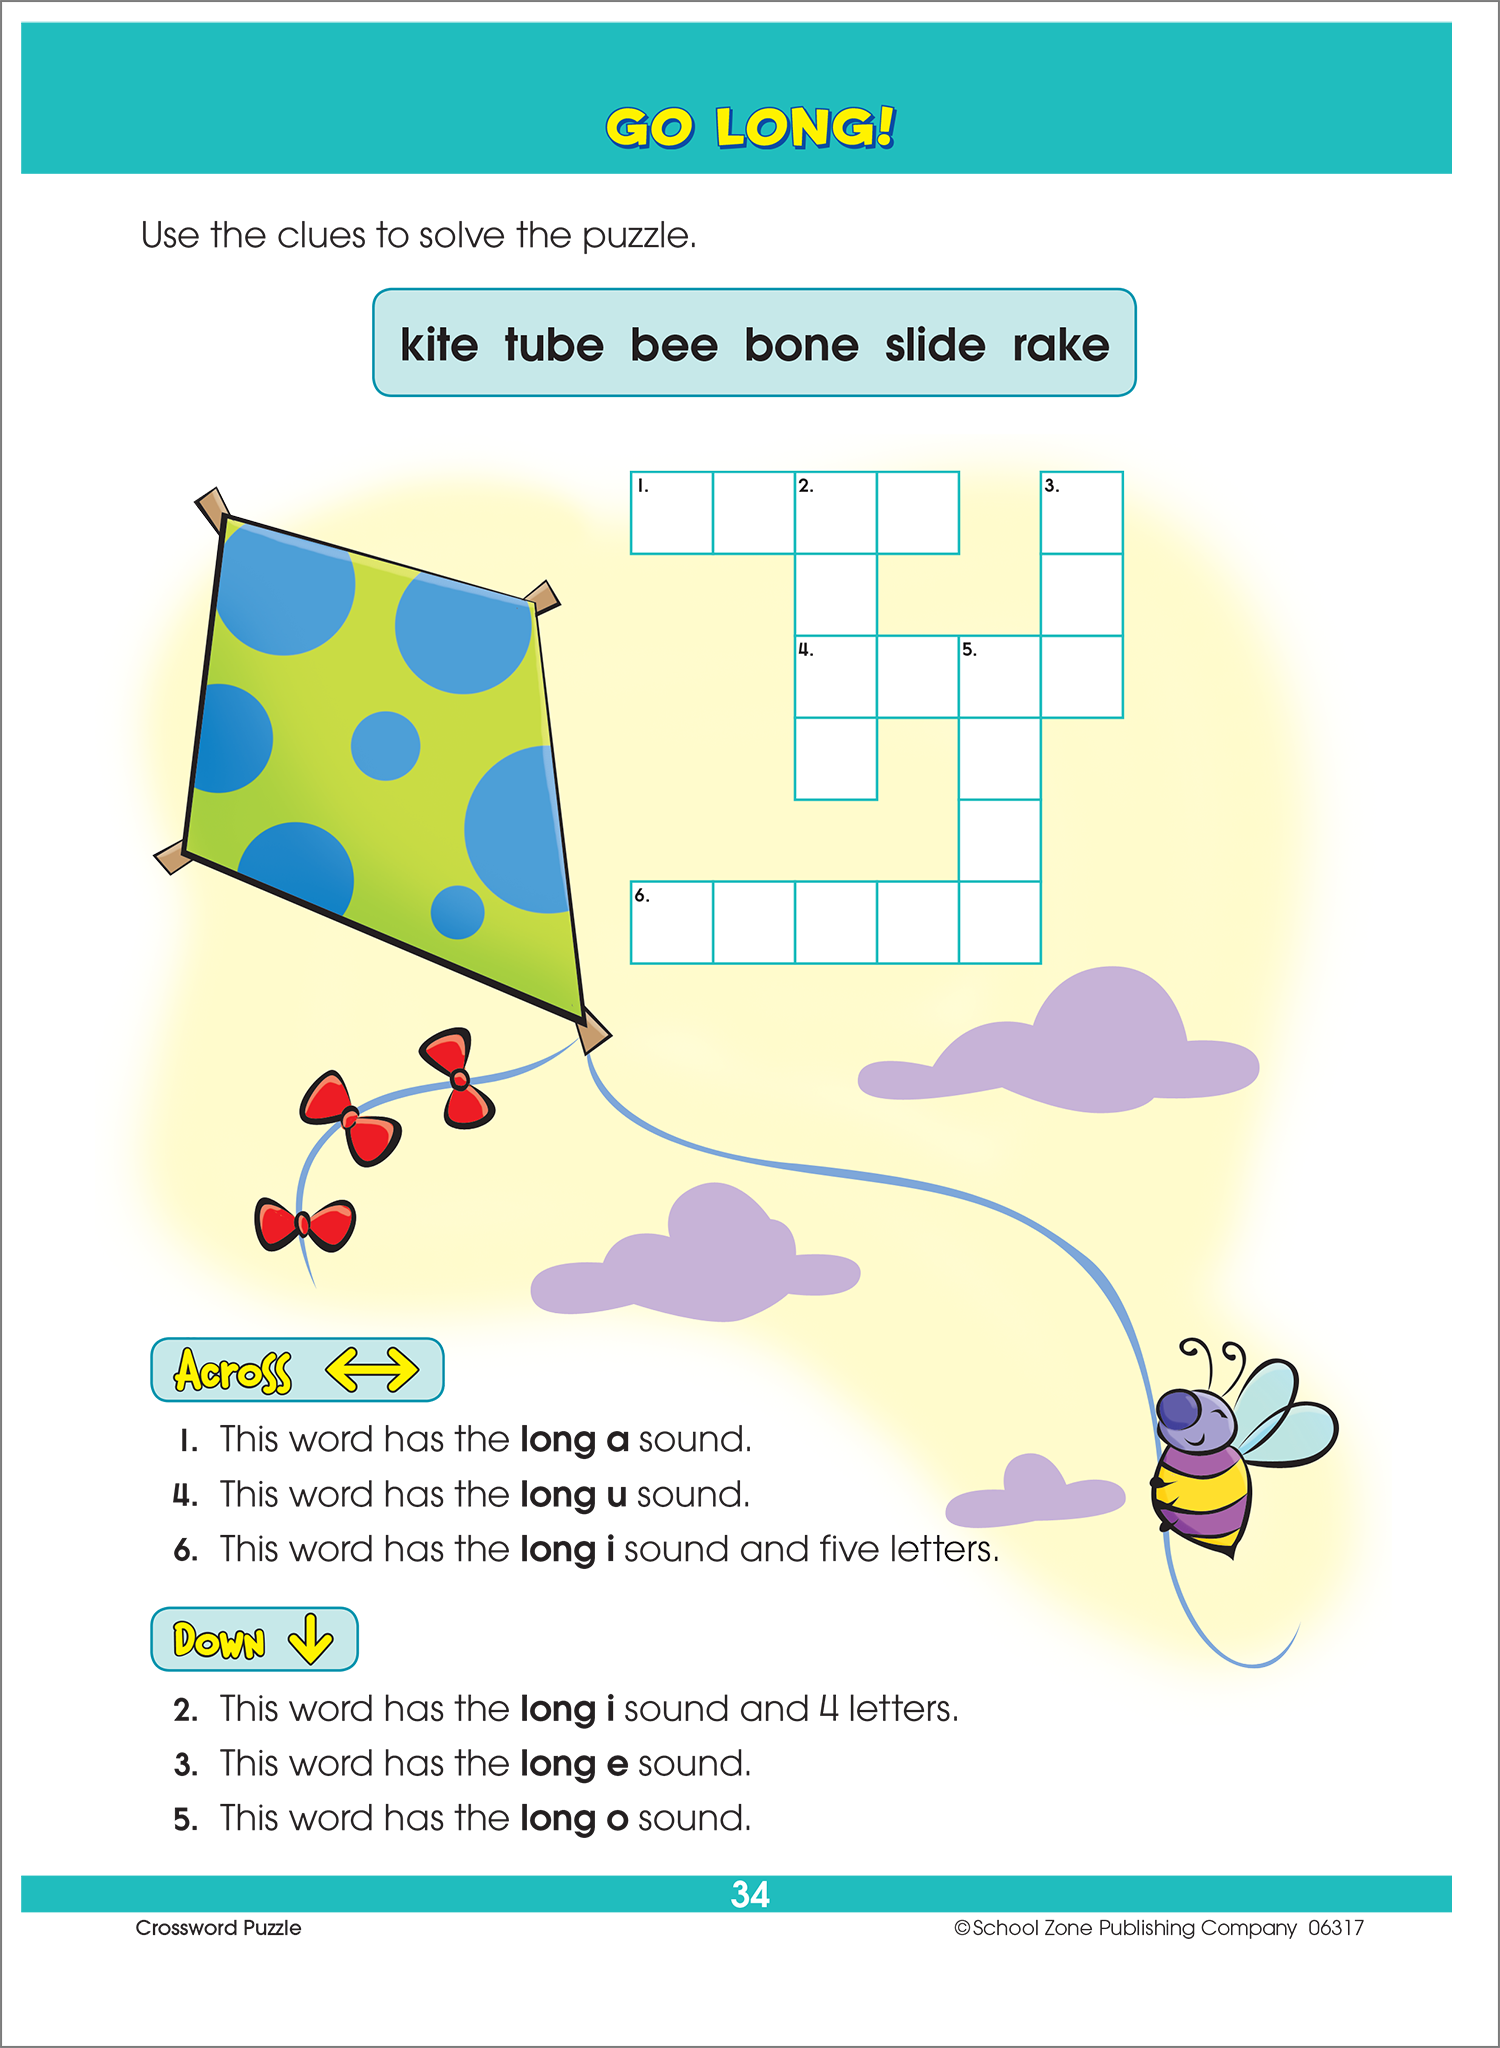 Big Math 1-2 Workbook (Spiral Bound) – School Zone Publishing Company